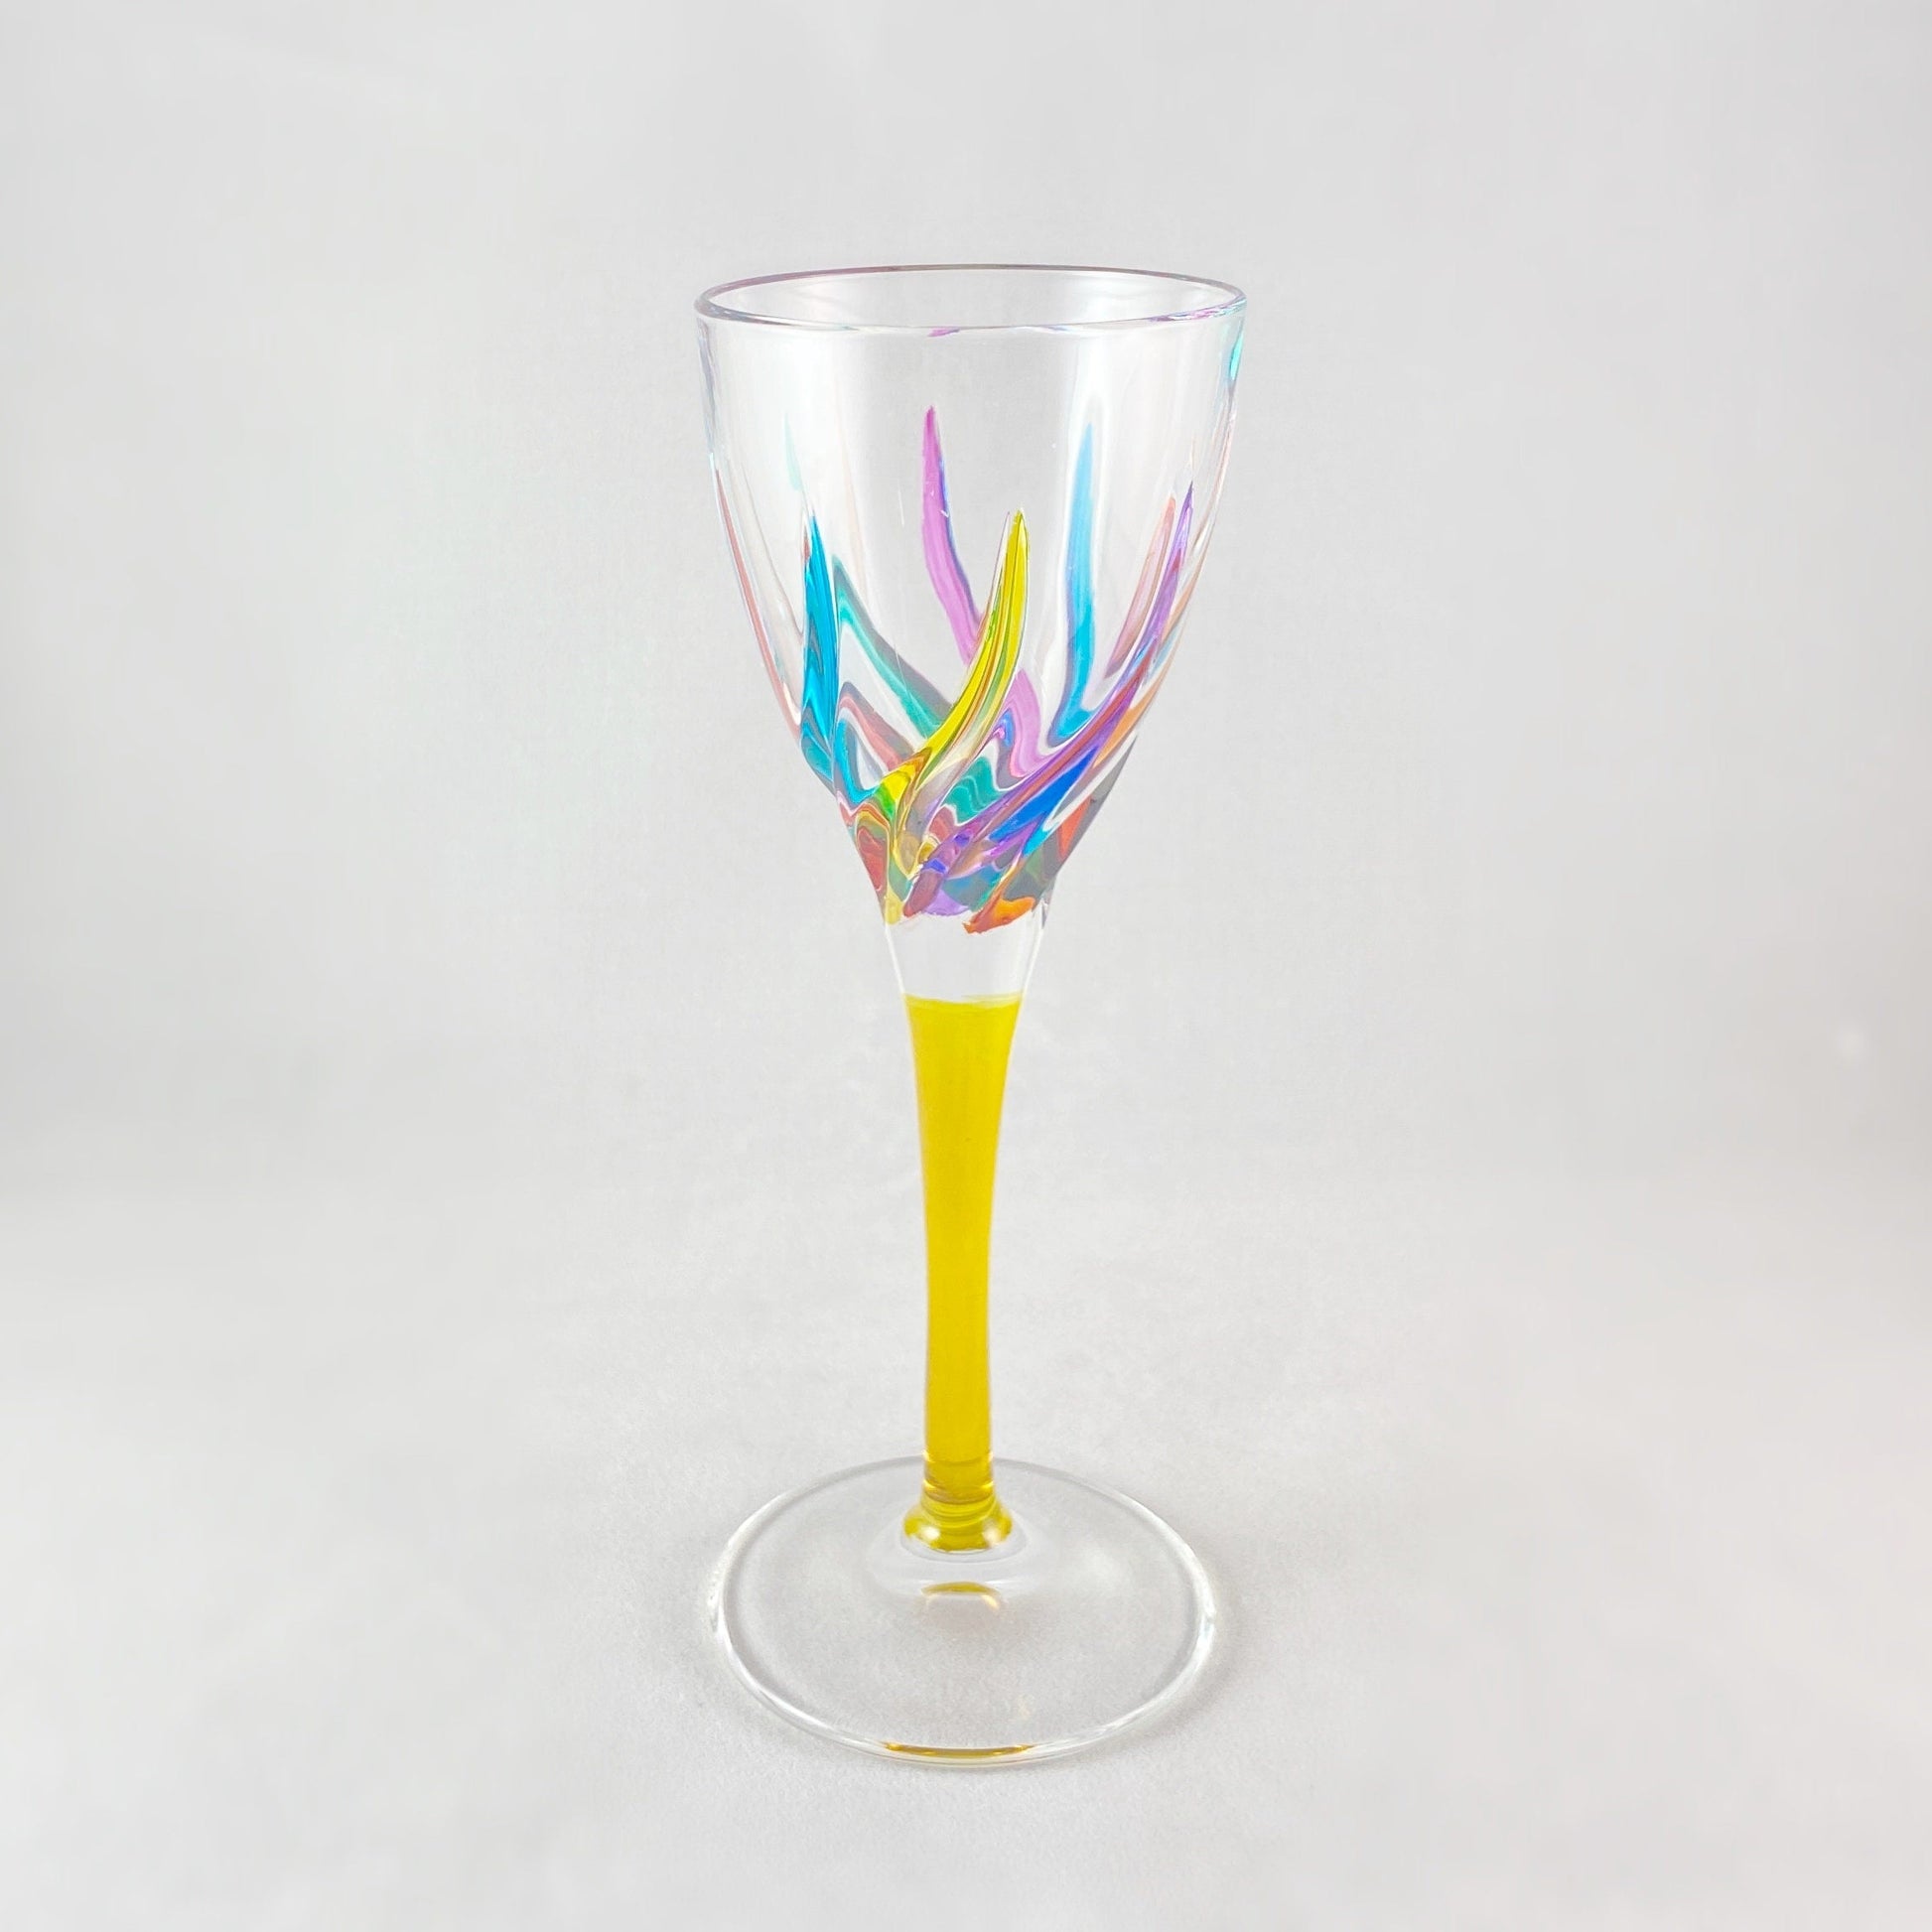 Yellow Stem Venetian Glass Trix Cordial Liquor Glass - Handmade in Italy, Colorful Murano Glass